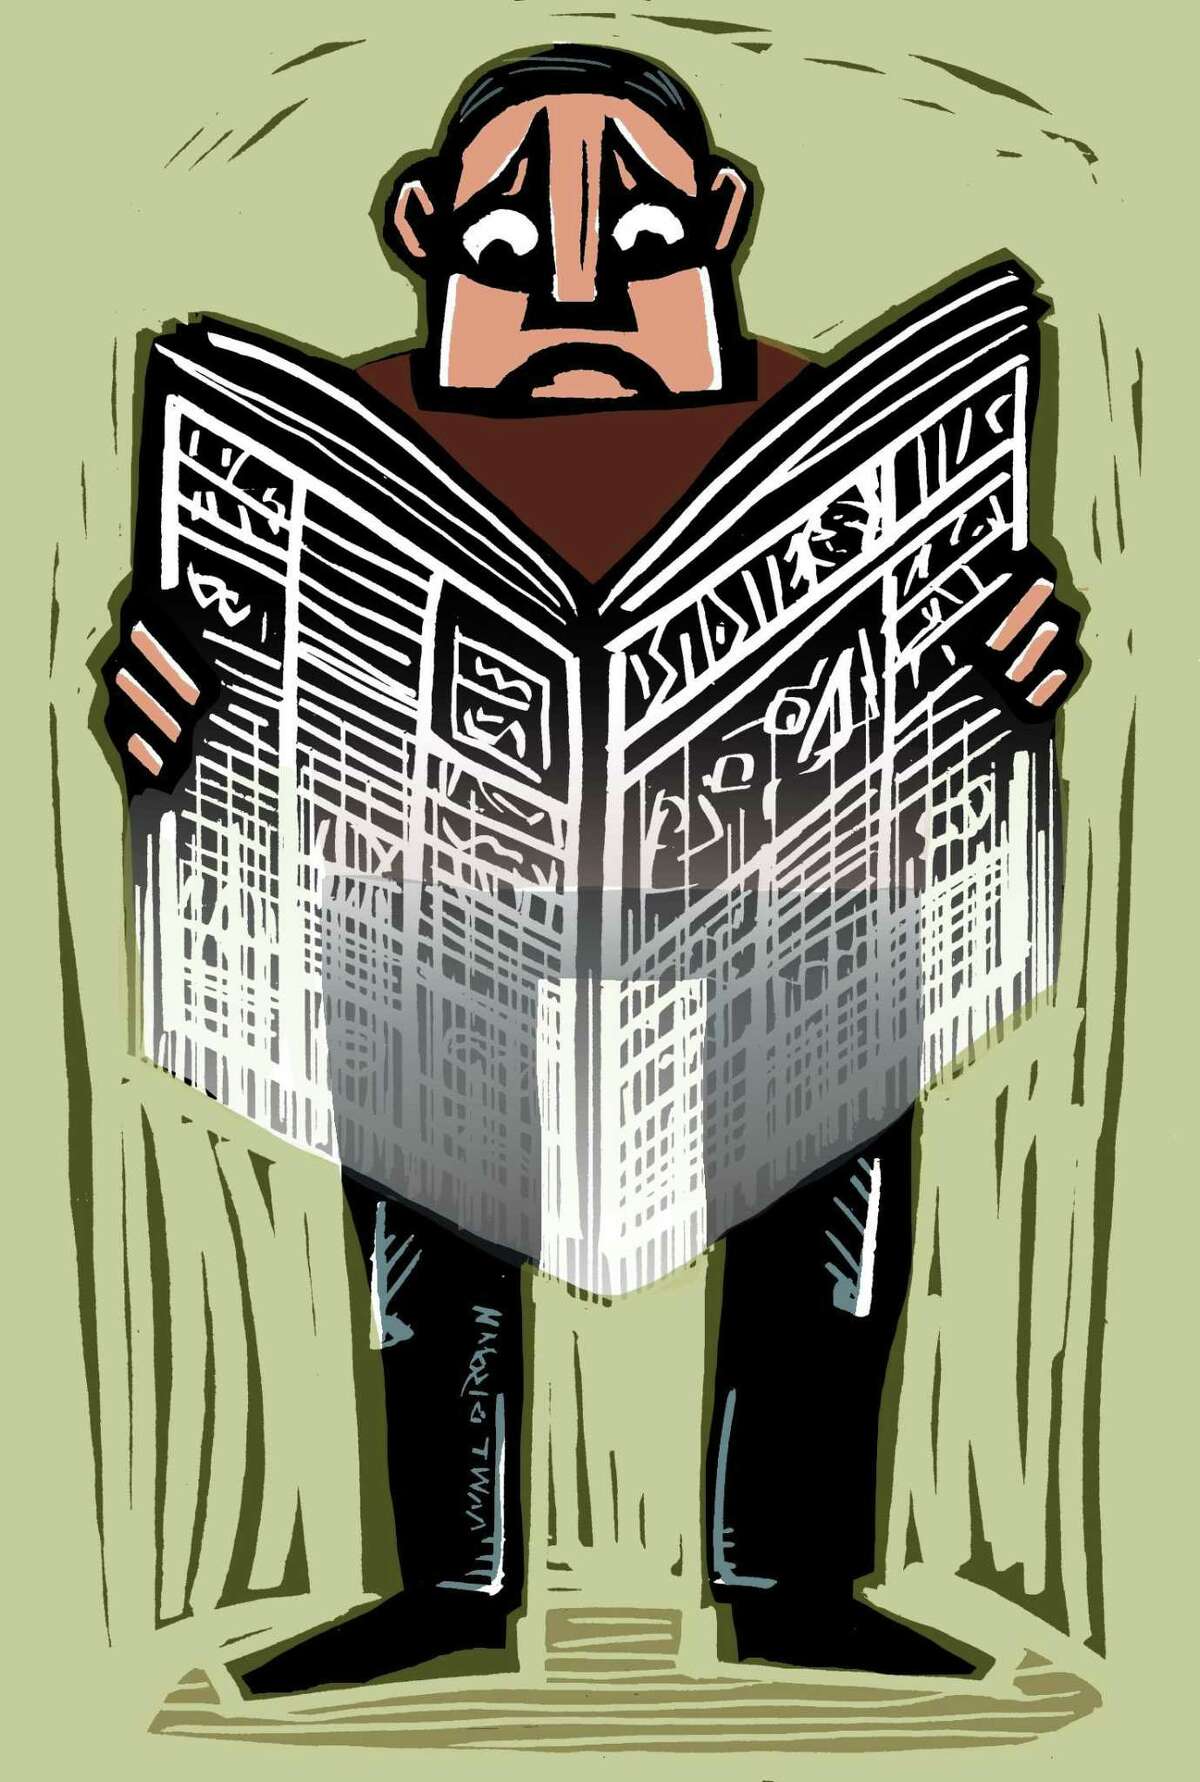 Illustration about journalism.